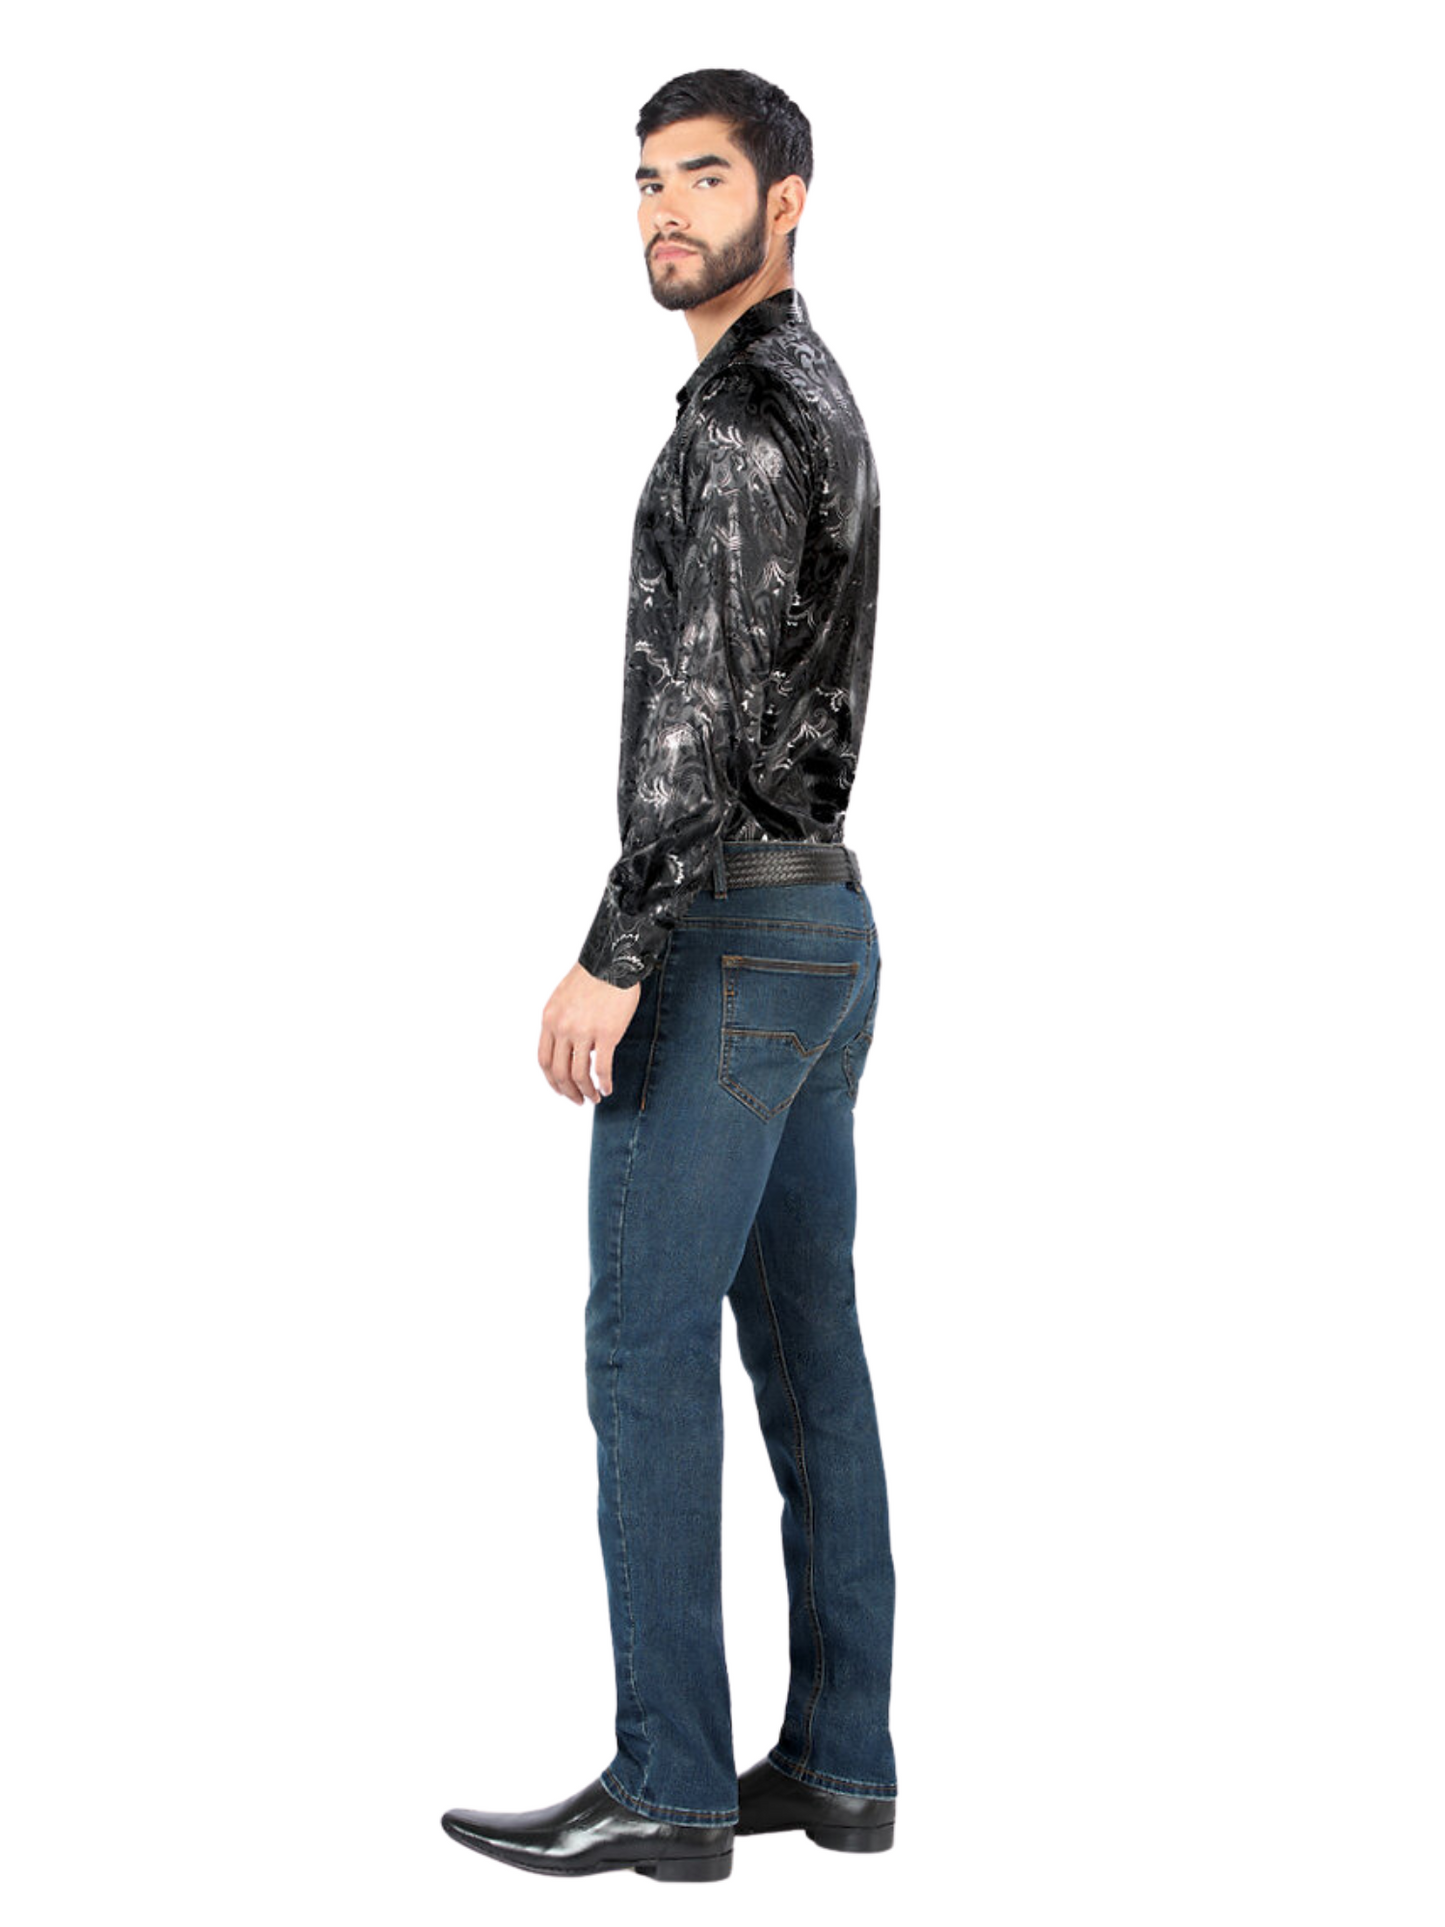 Stretch Denim Jeans for Men 'Montero' - ID: 5304 Denim Jeans Montero